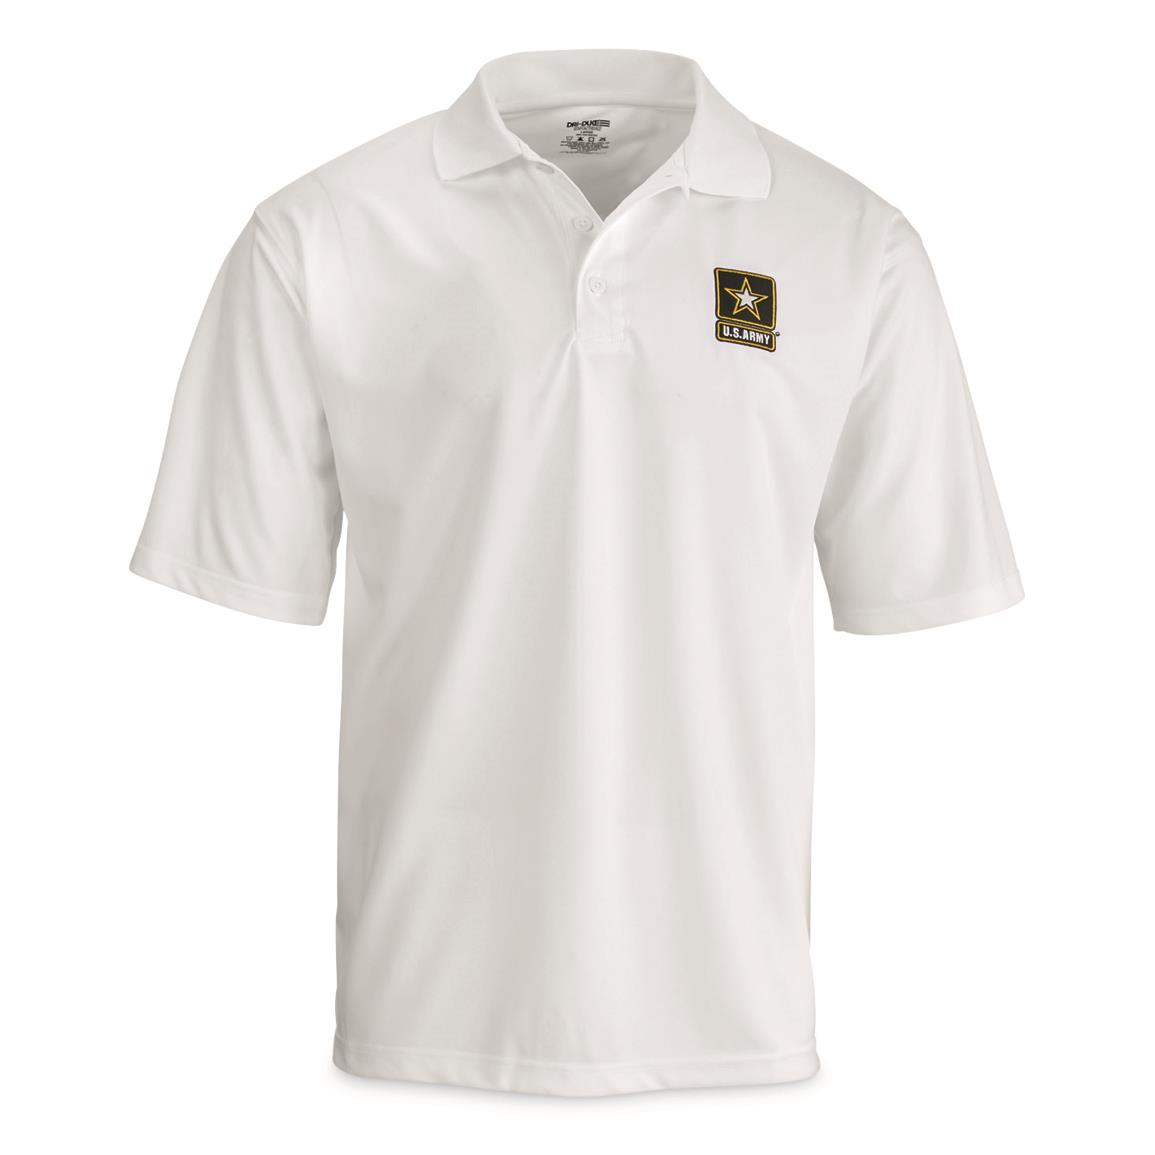 U.S. Army Polo Shirt, White